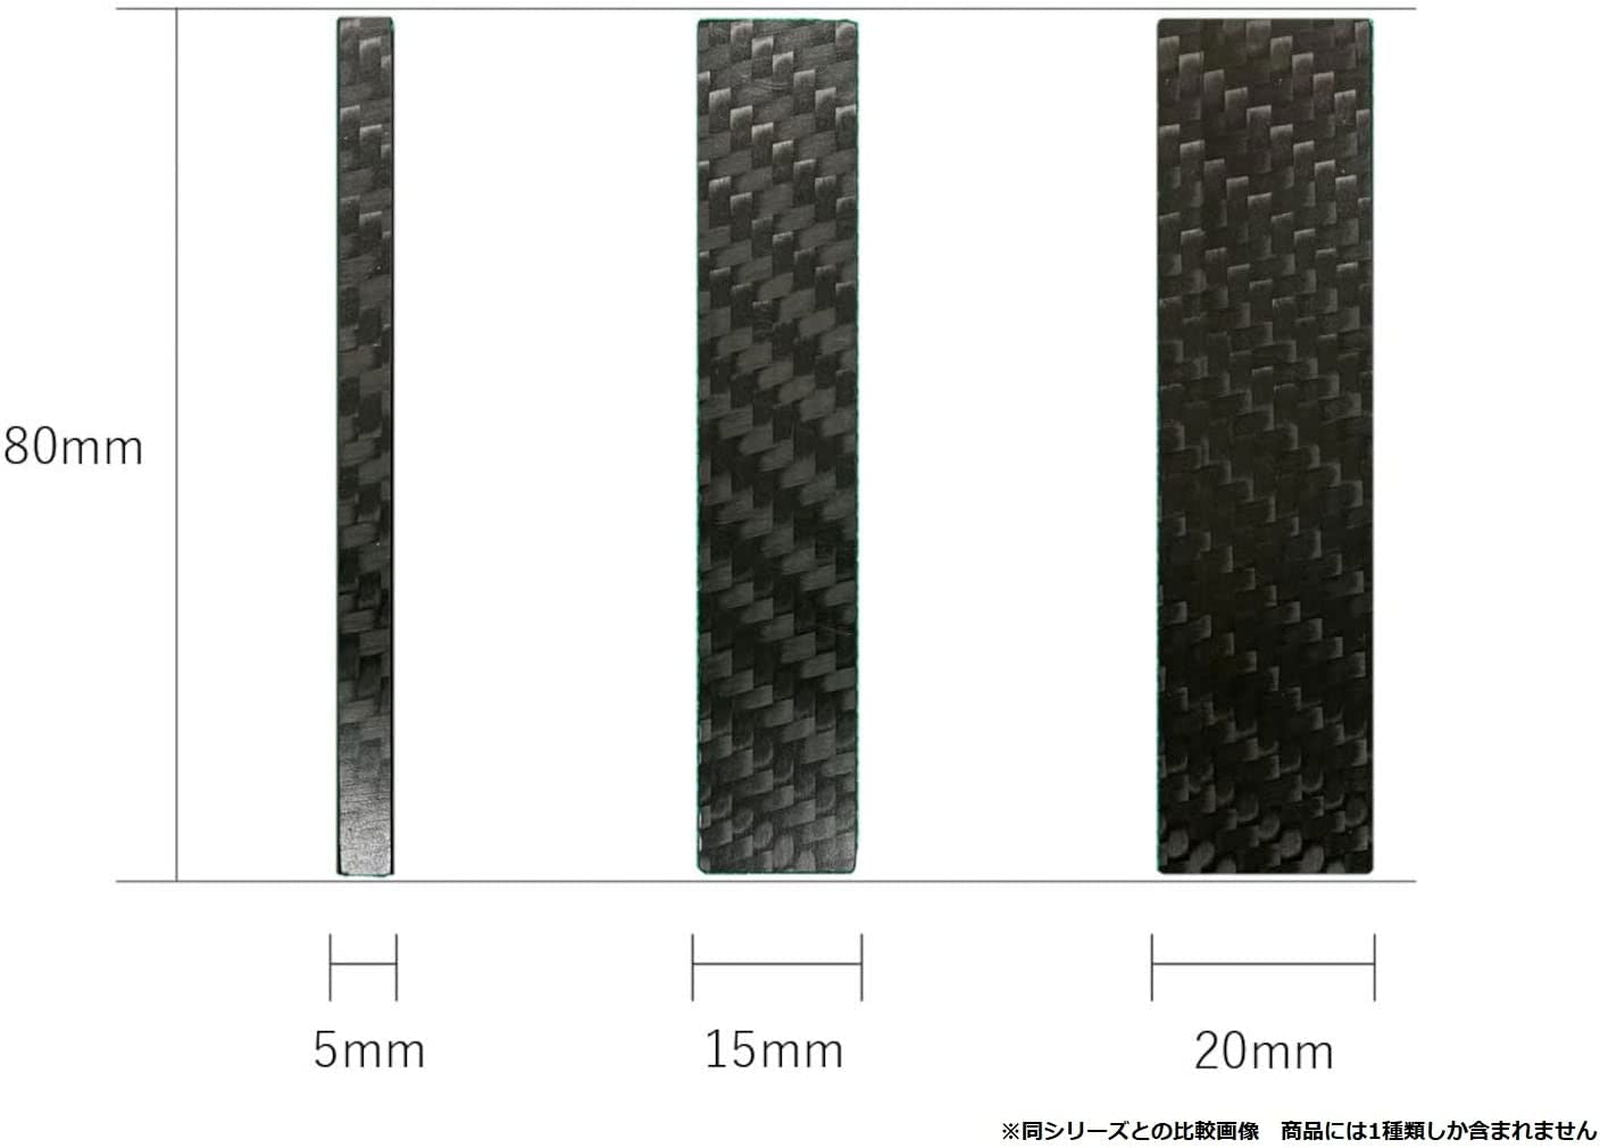 Doyusha Carbon Plate 15mm for Sandpaper (for SGOT! Series) - BanzaiHobby